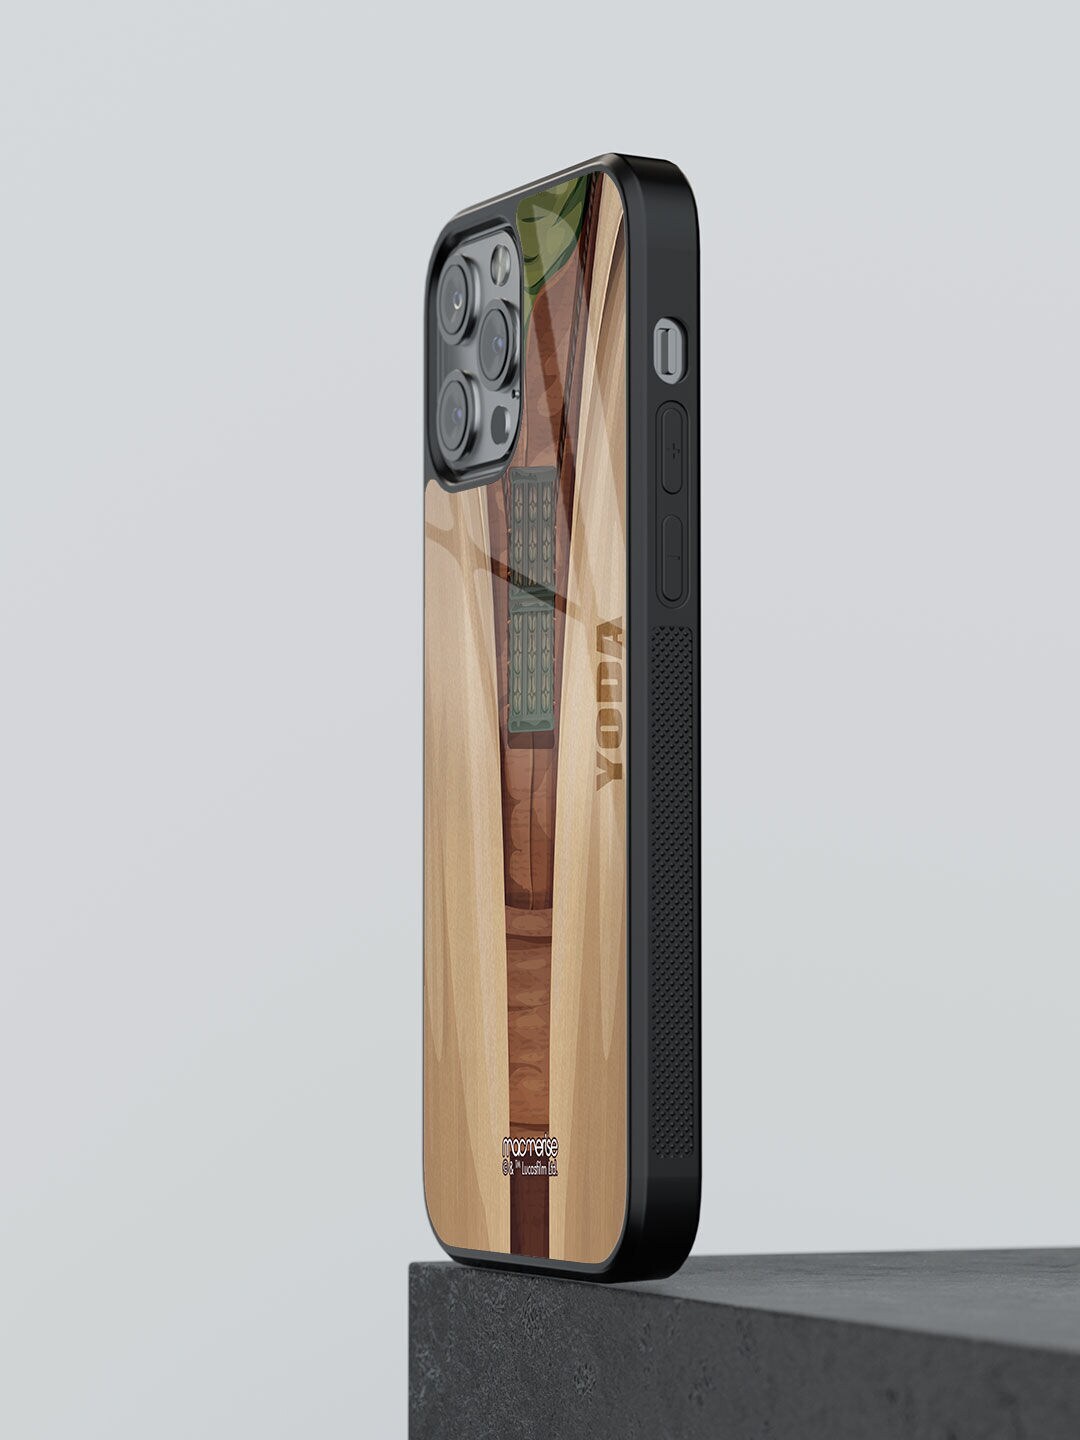 Macmerise Brown Attire Yoda Printed iPhone 12 Pro Max Back Case Price in India